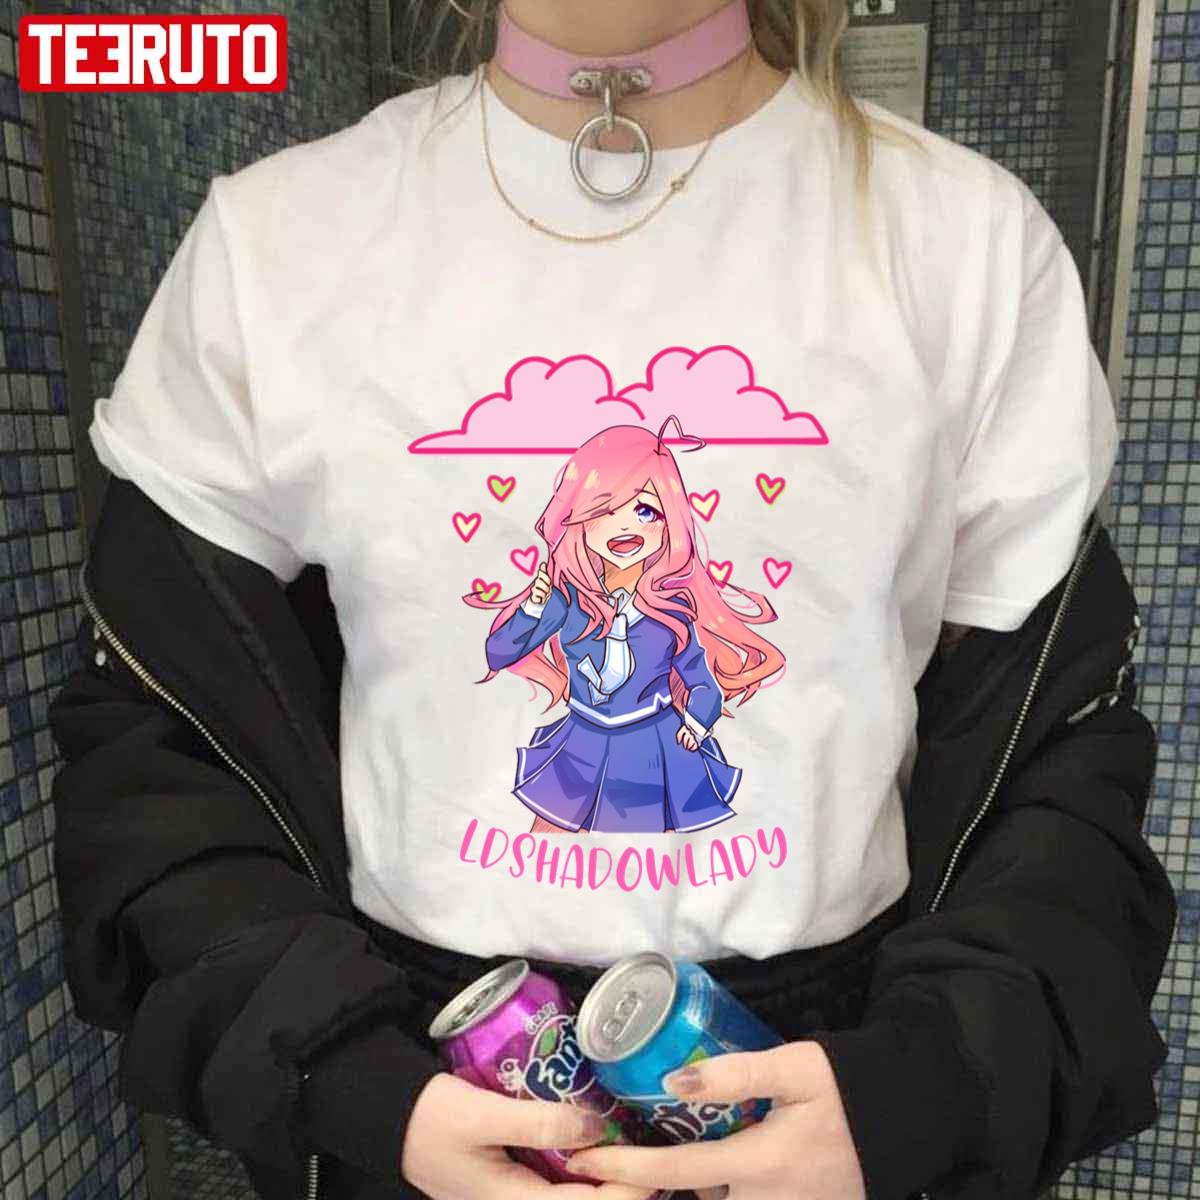 Ldshadowlady Lizzie Youtuber Art Unisex T-shirt - Teeruto